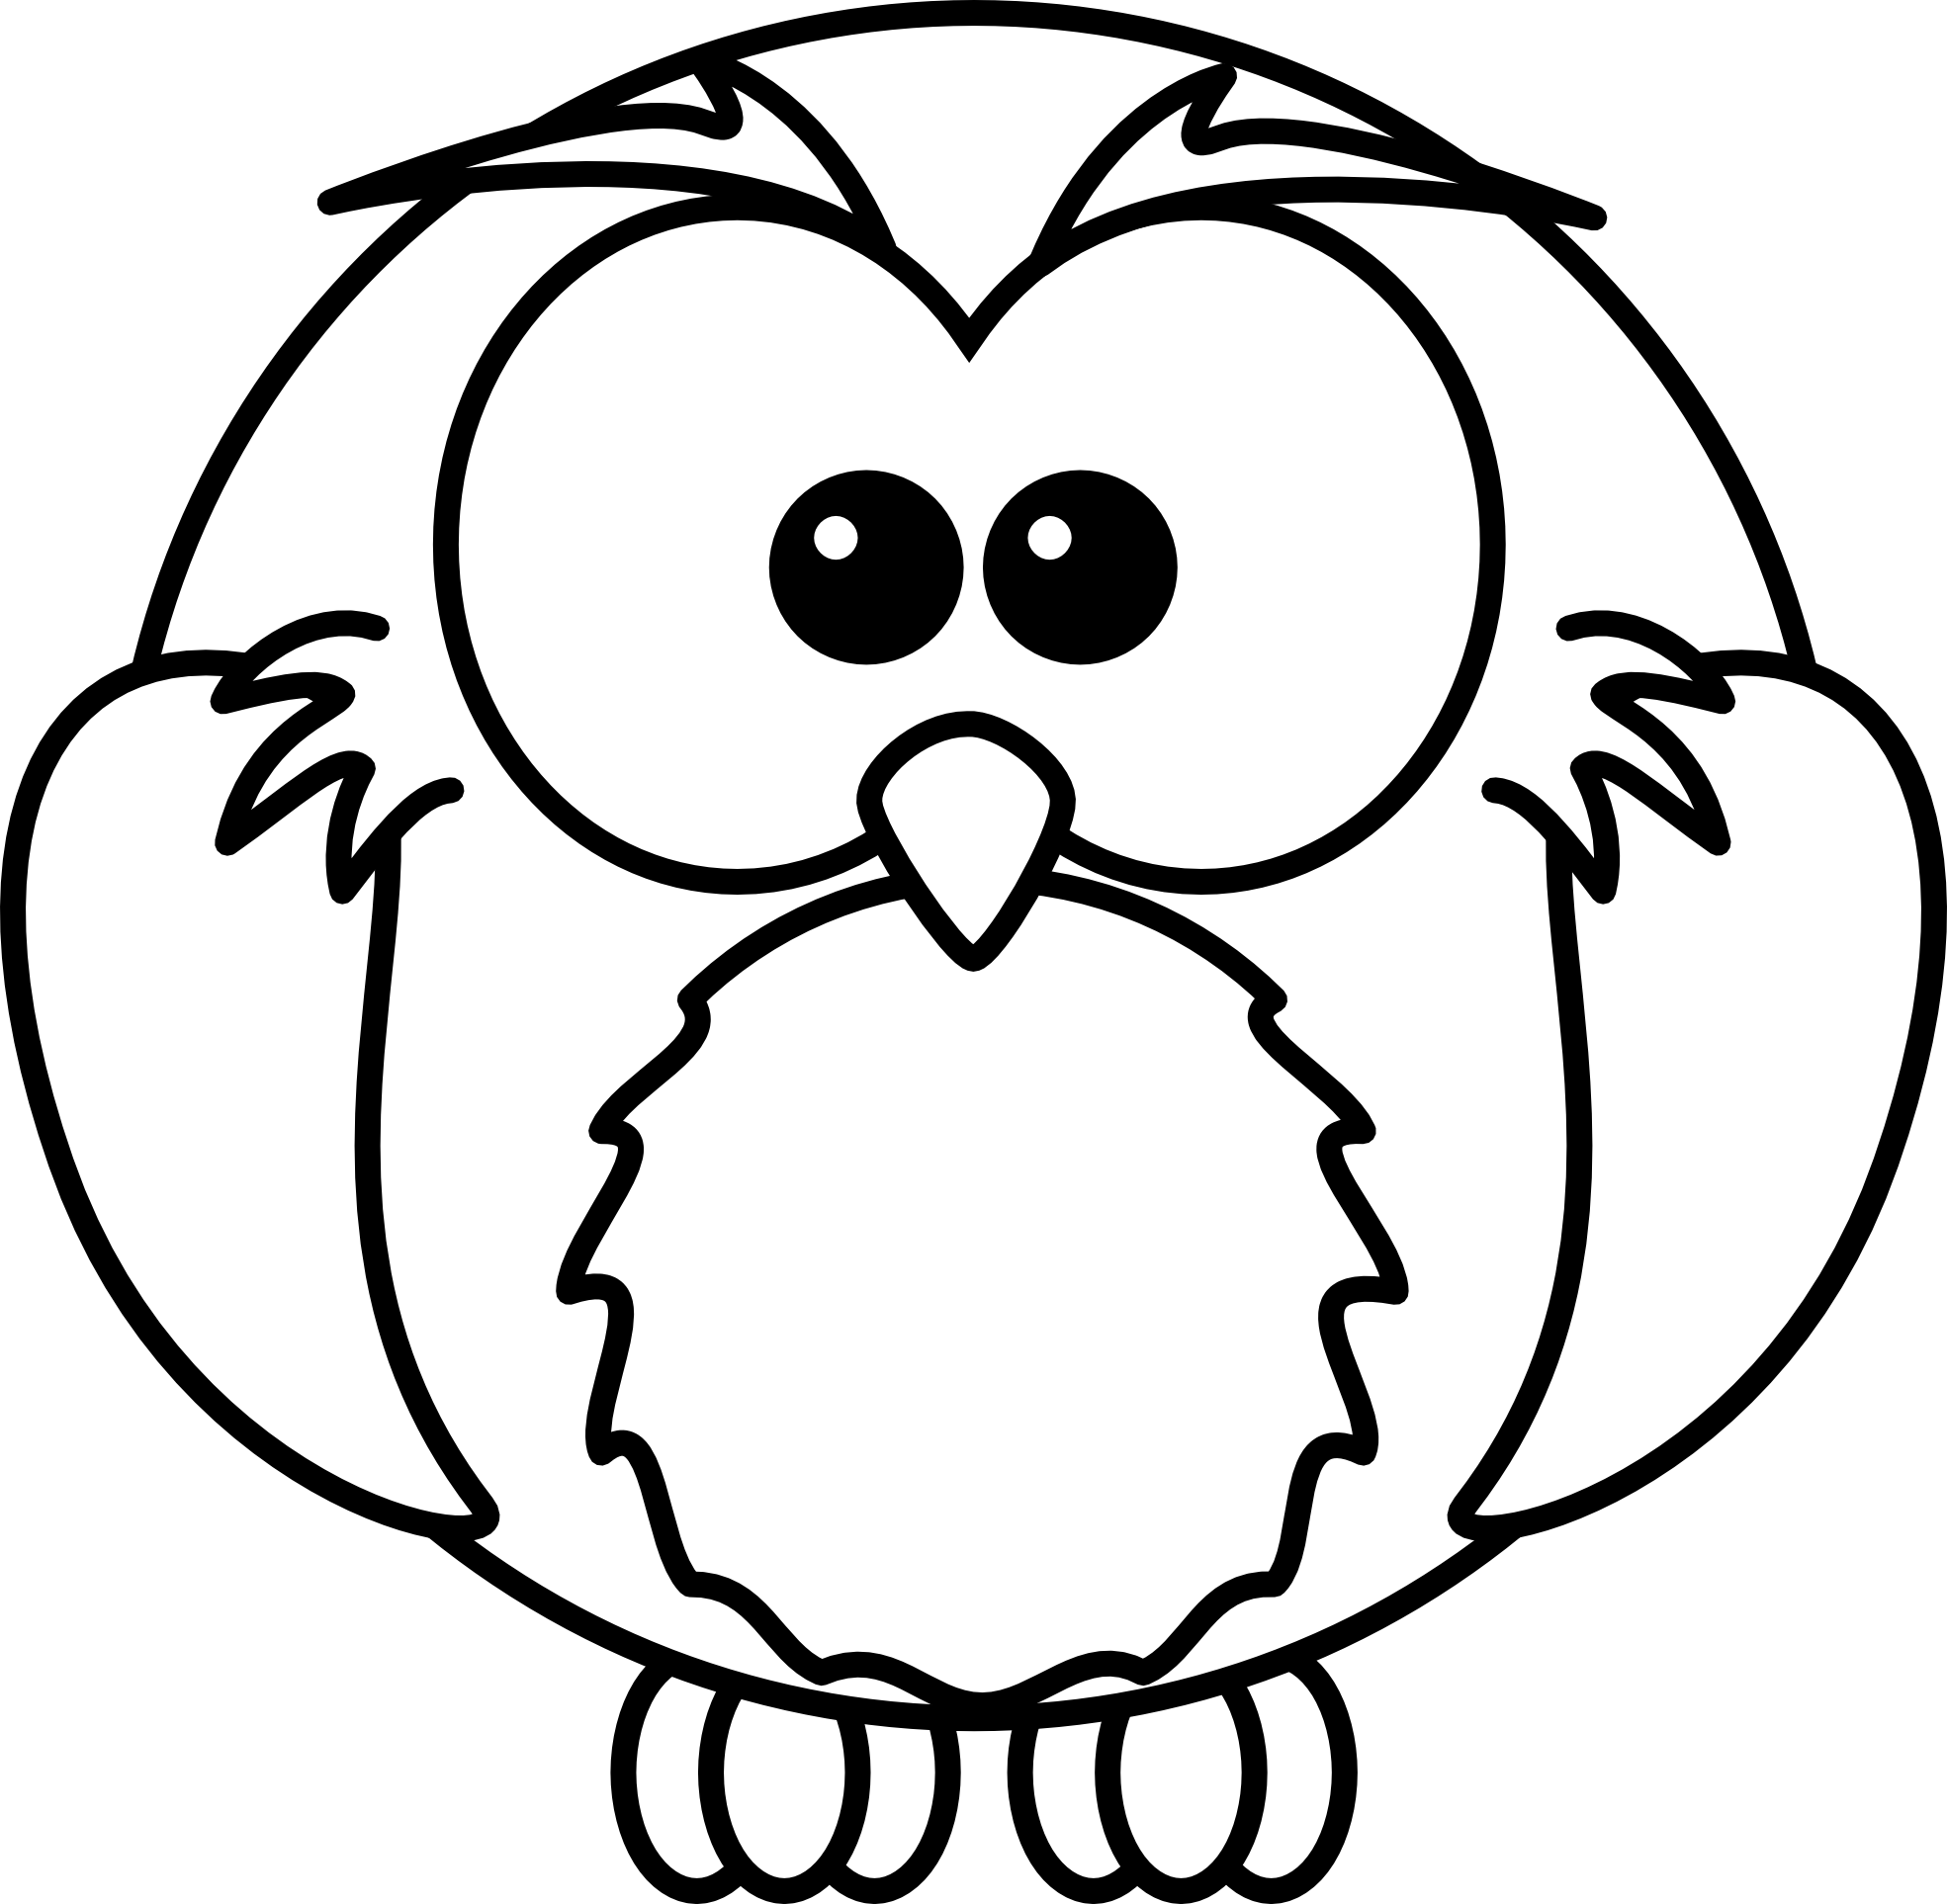 Baby owl clipart black and white danaami2 top